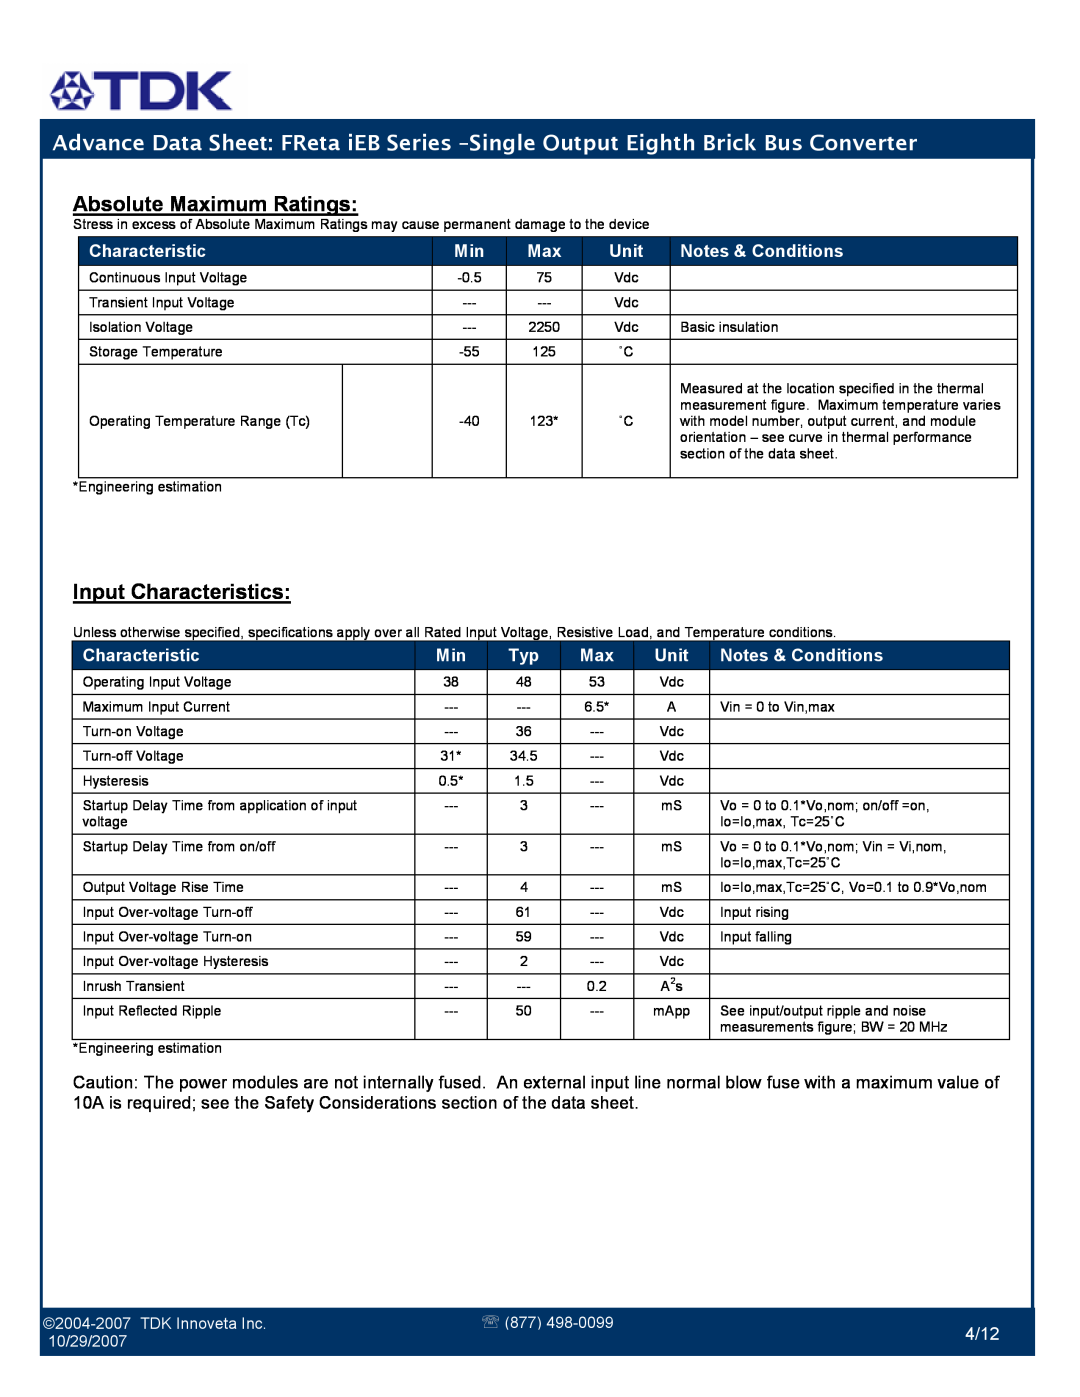 TDK iEB Series manual Absolute Maximum Ratings, Input Characteristics, Unit, Notes & Conditions, 4/12 